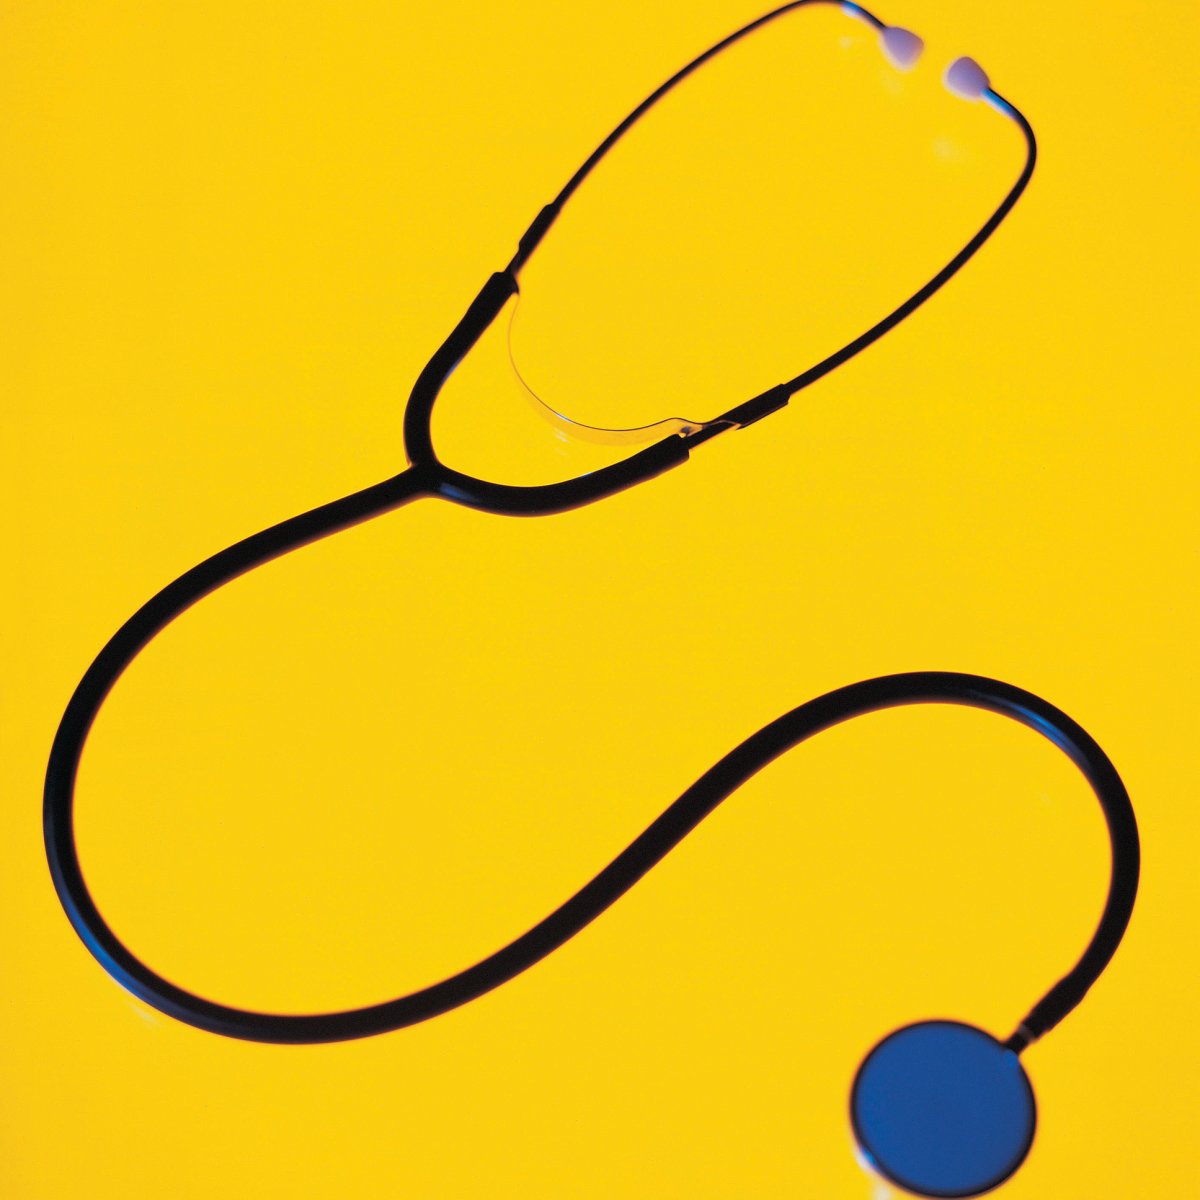 Stethoscope on yellow background